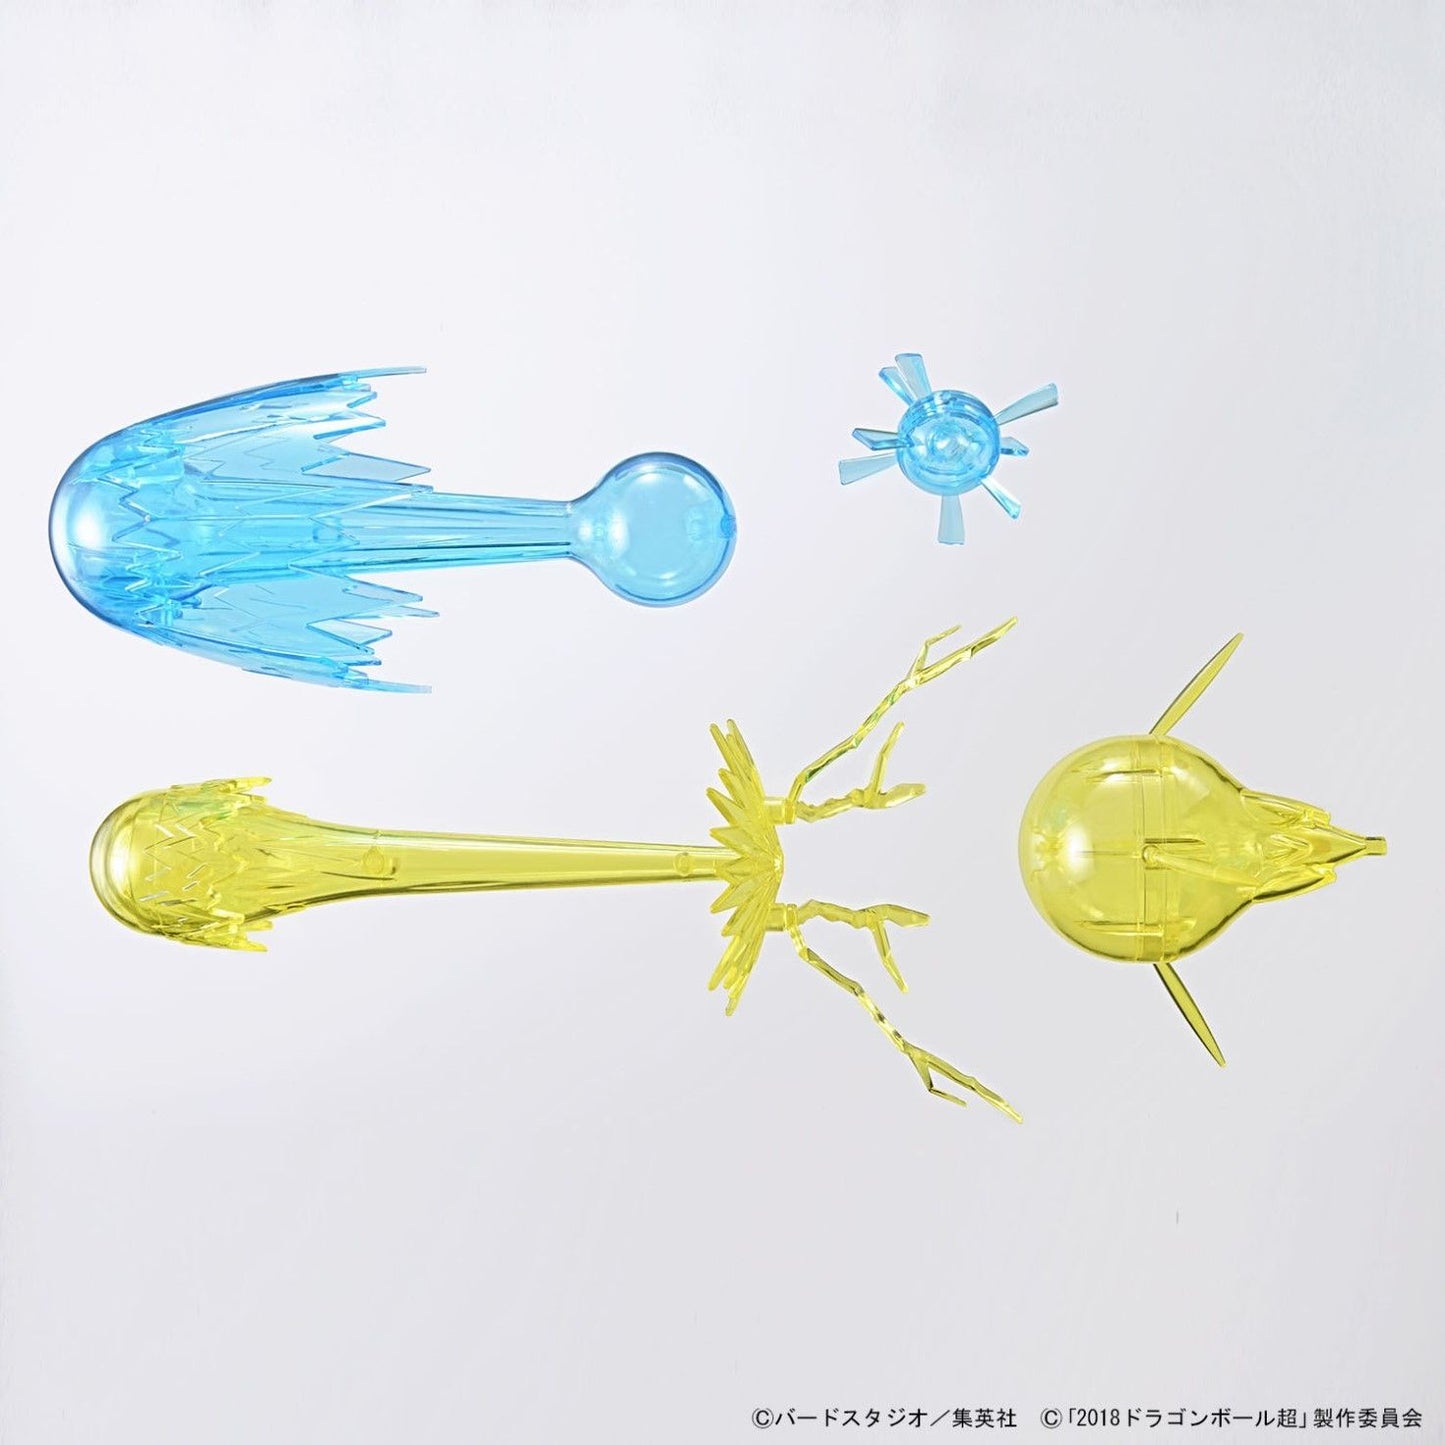 Bandai Spirits Figura - Rise Standard Super Saiyan God Super Saiyan Gogeta Dragon Ball Super Model Kit